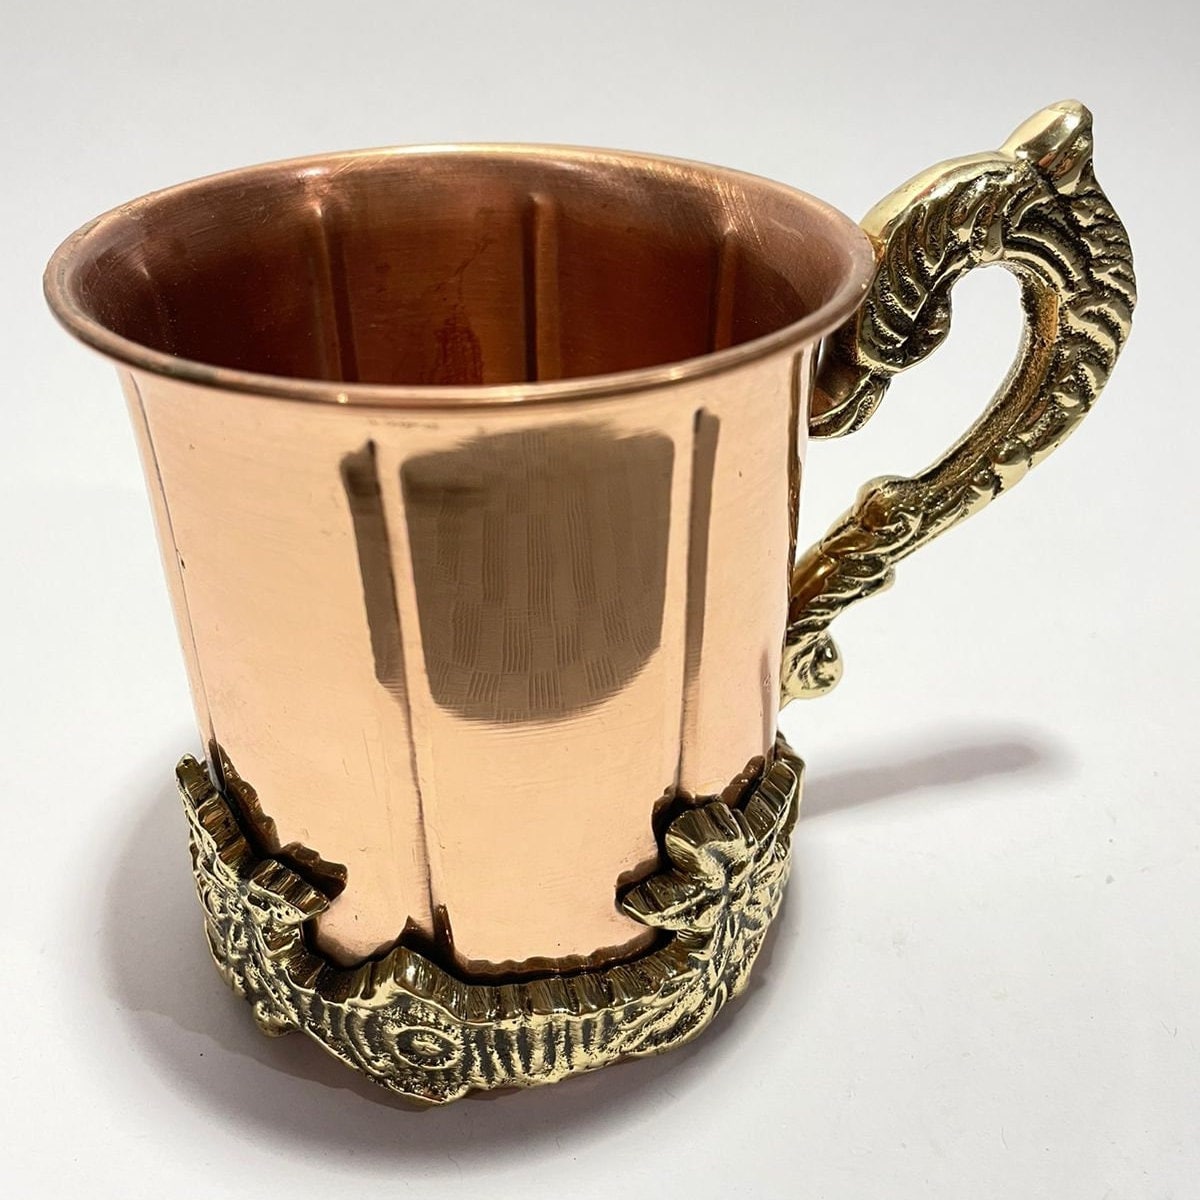 Copper Mug Vintage Copper Colored Metal Mug From India Large 